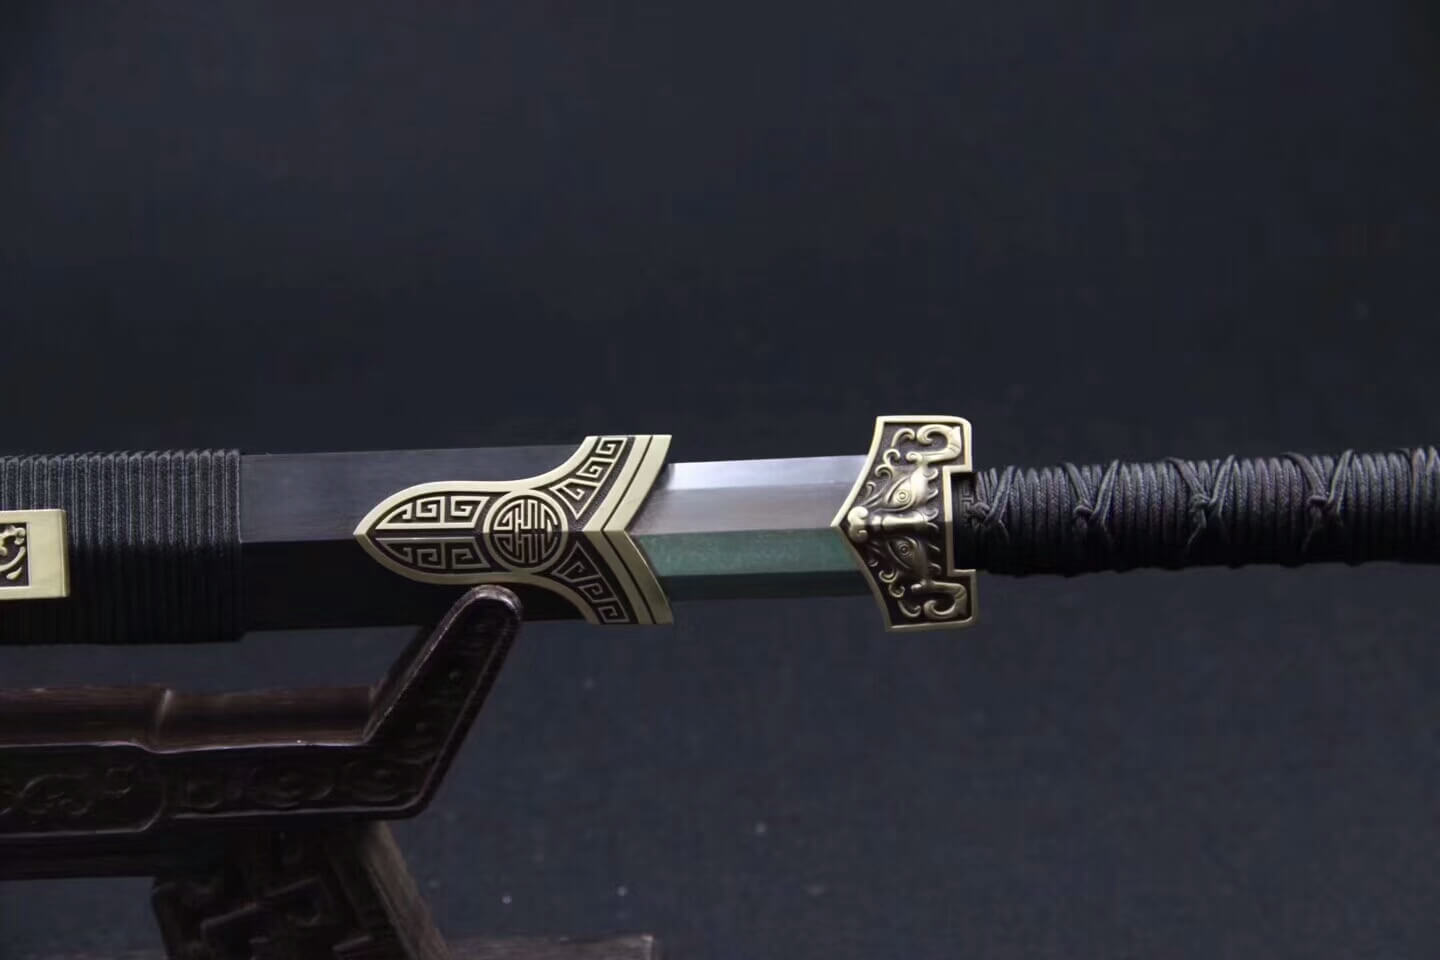 Hanwu sword(Damascus steel blade,Ebony scabbard,Brass fittings)Length 42" - Chinese sword shop